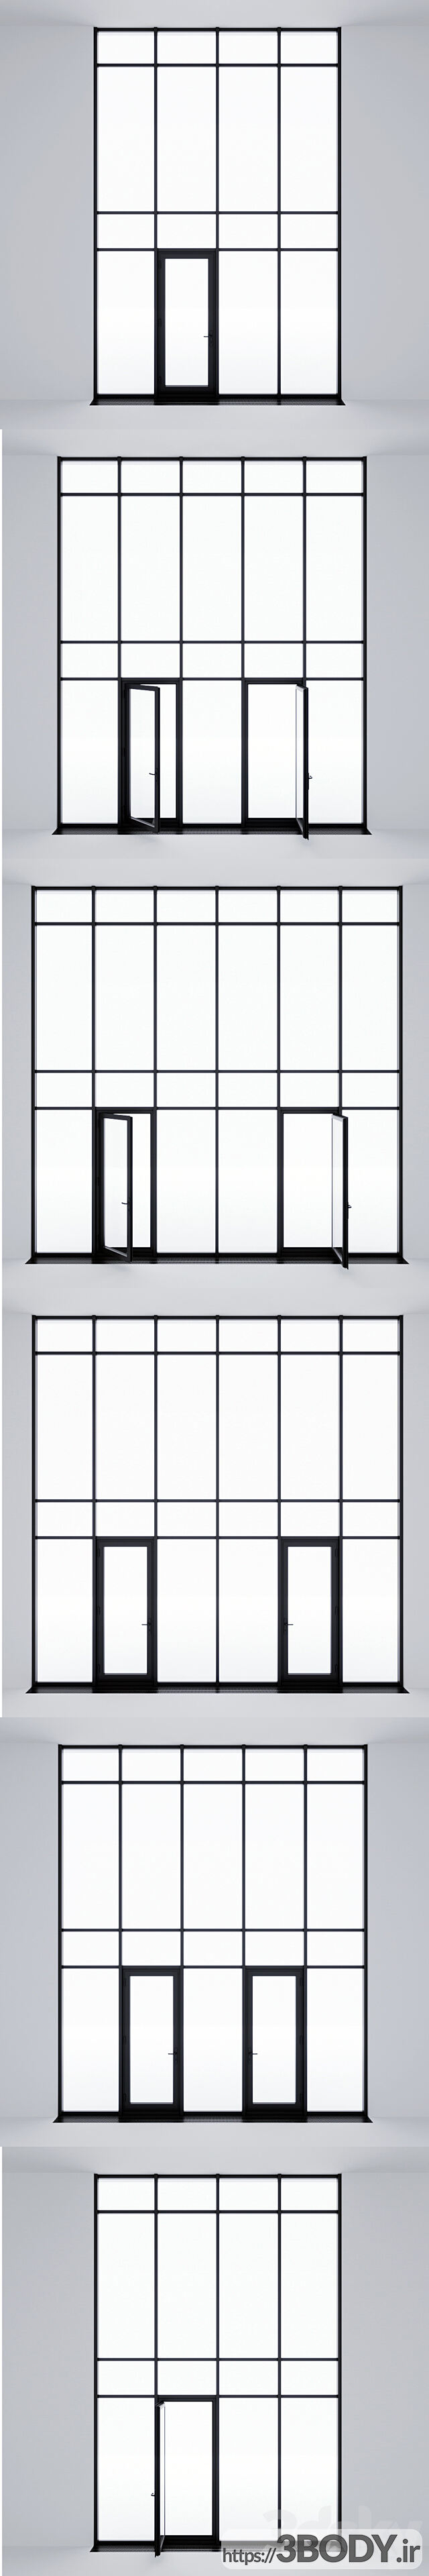 مدل سه بعدی پنجره مدرن عکس 3